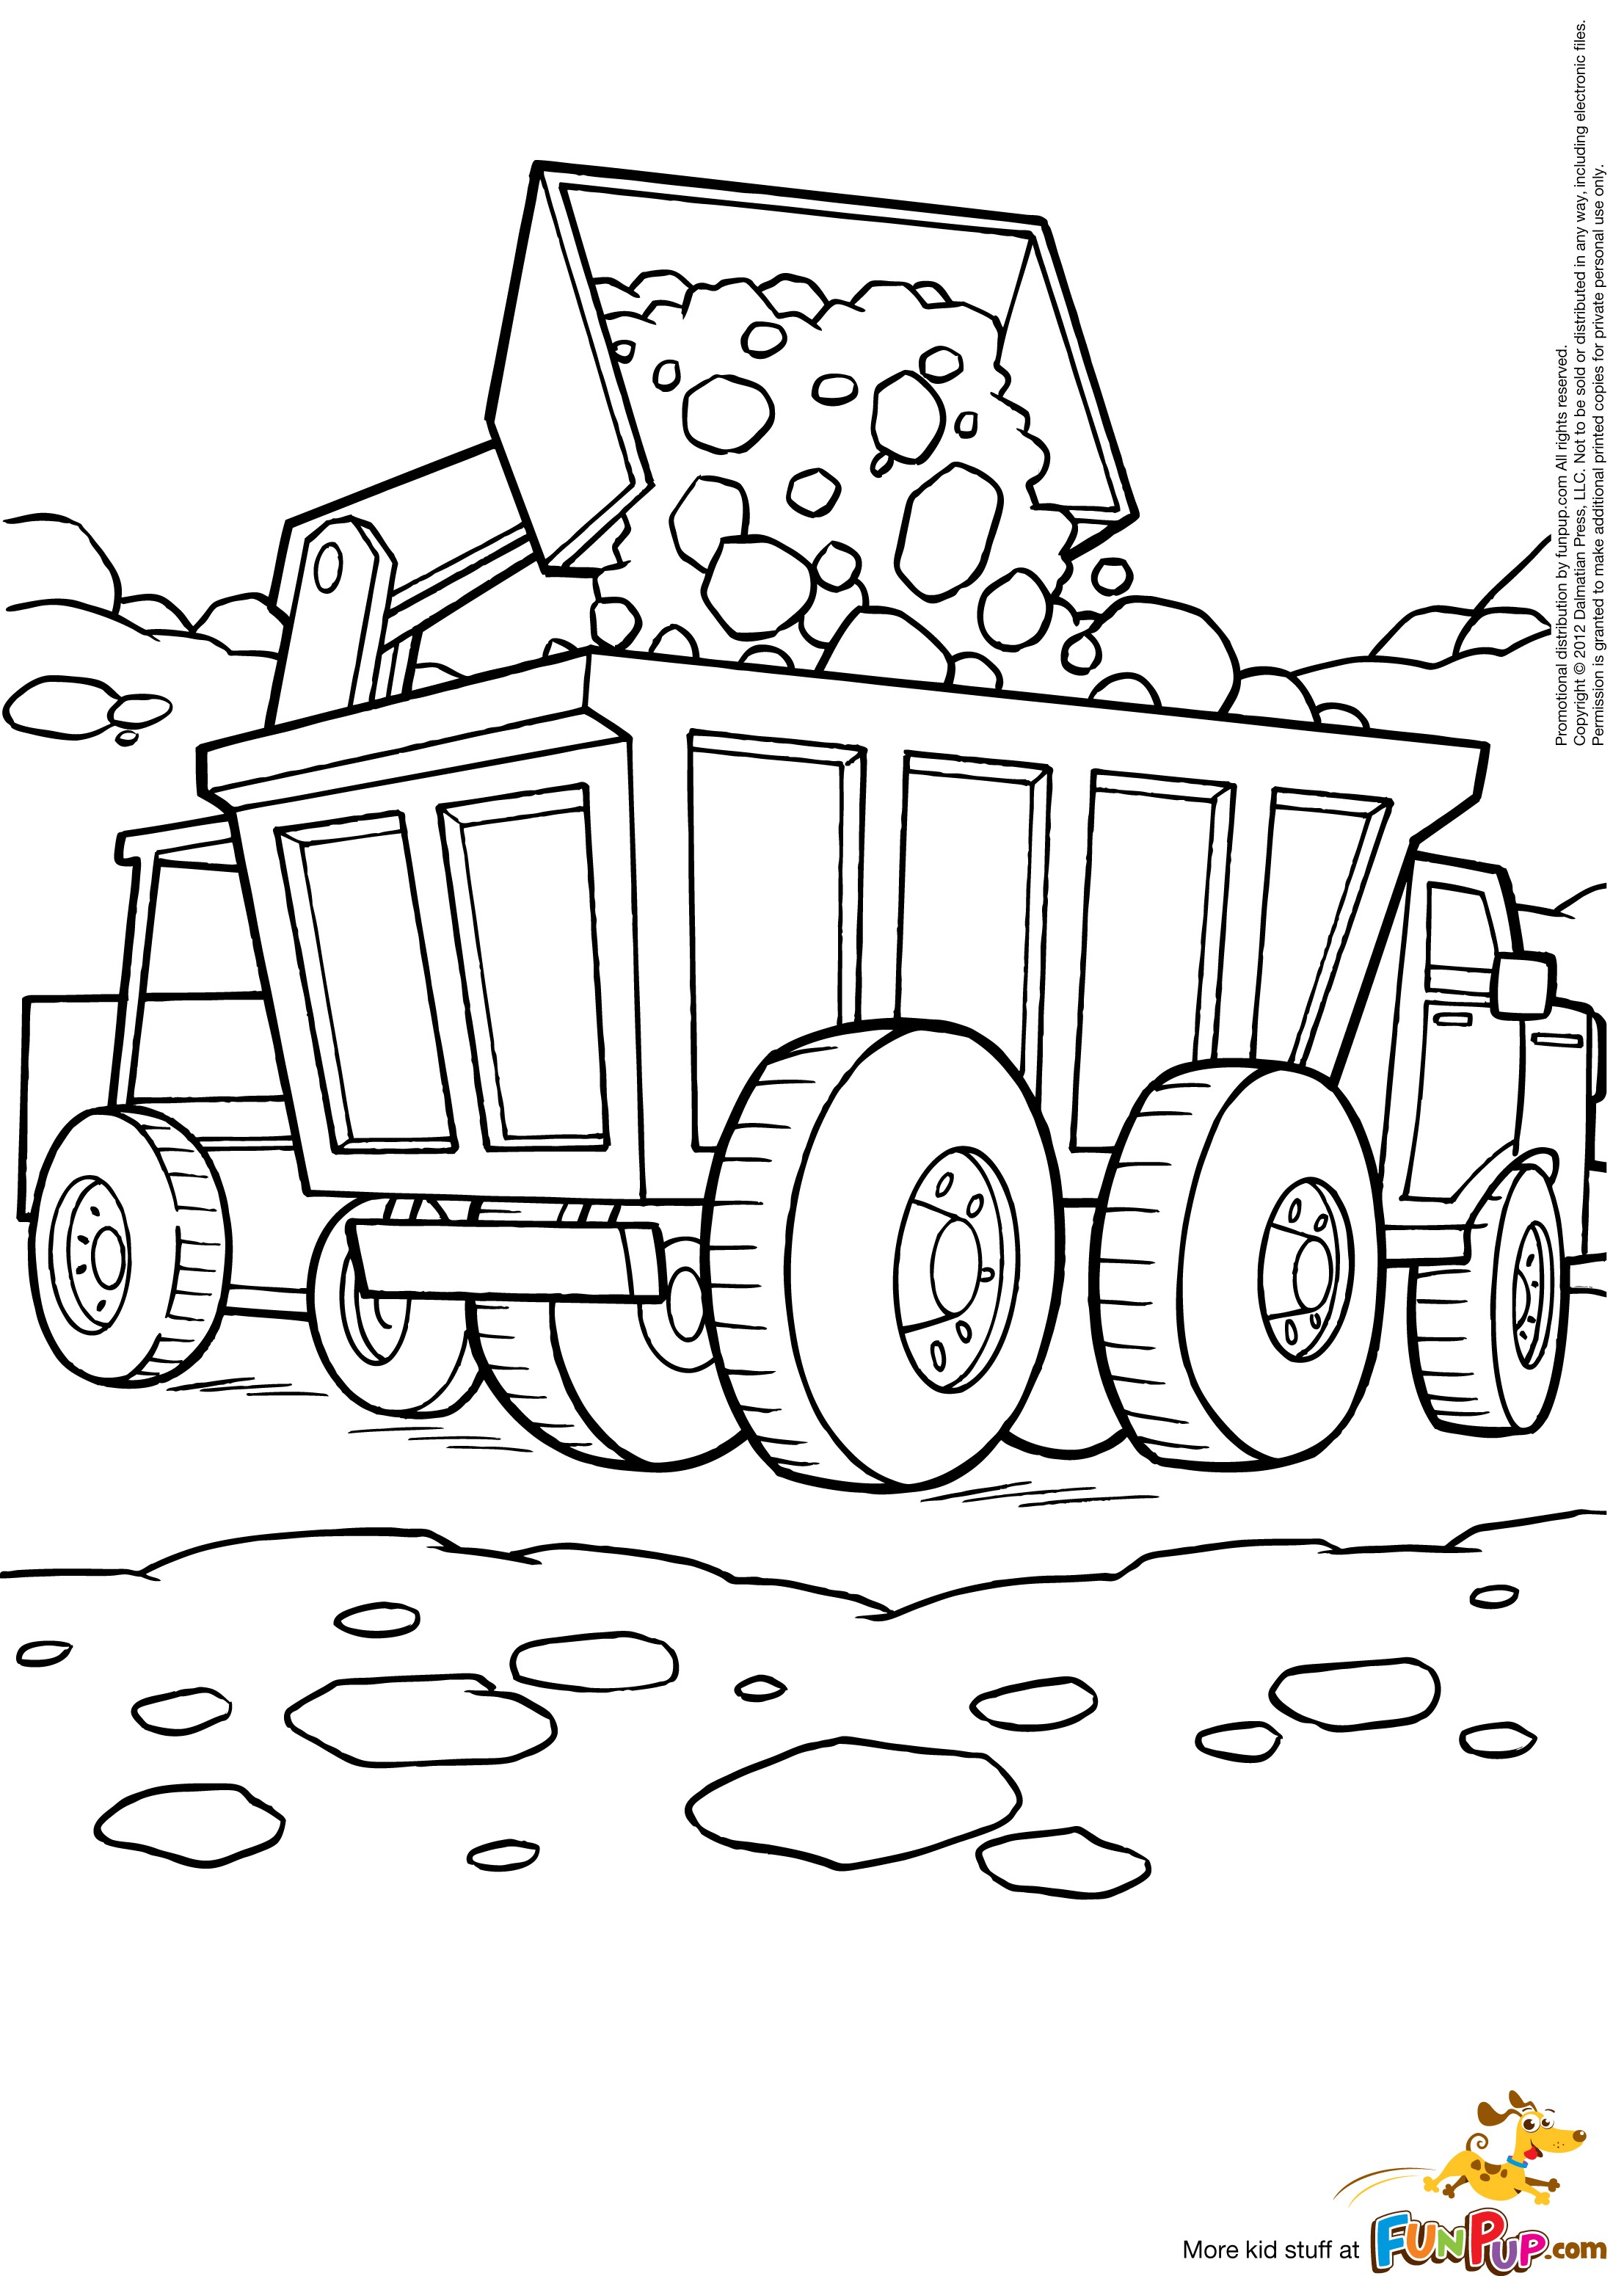 Dessin #15986 - Coloriage de bulldozer à imprimer